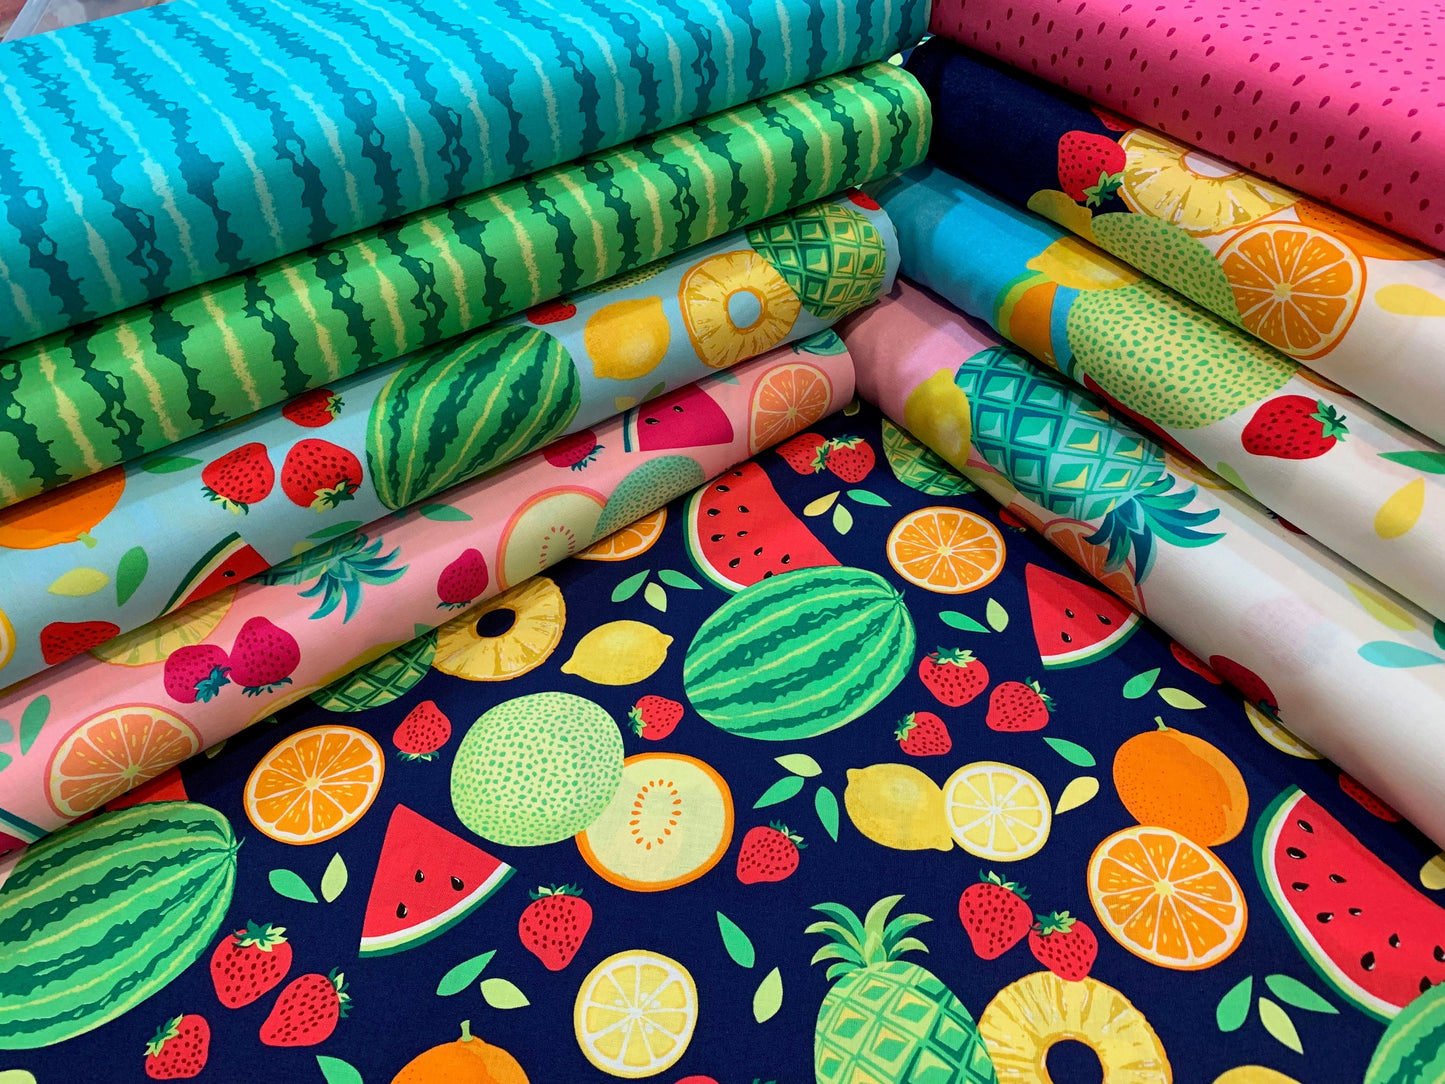 Sew Fruity Turquoise Melanie CX8520-TURQ Cotton Woven Fabric